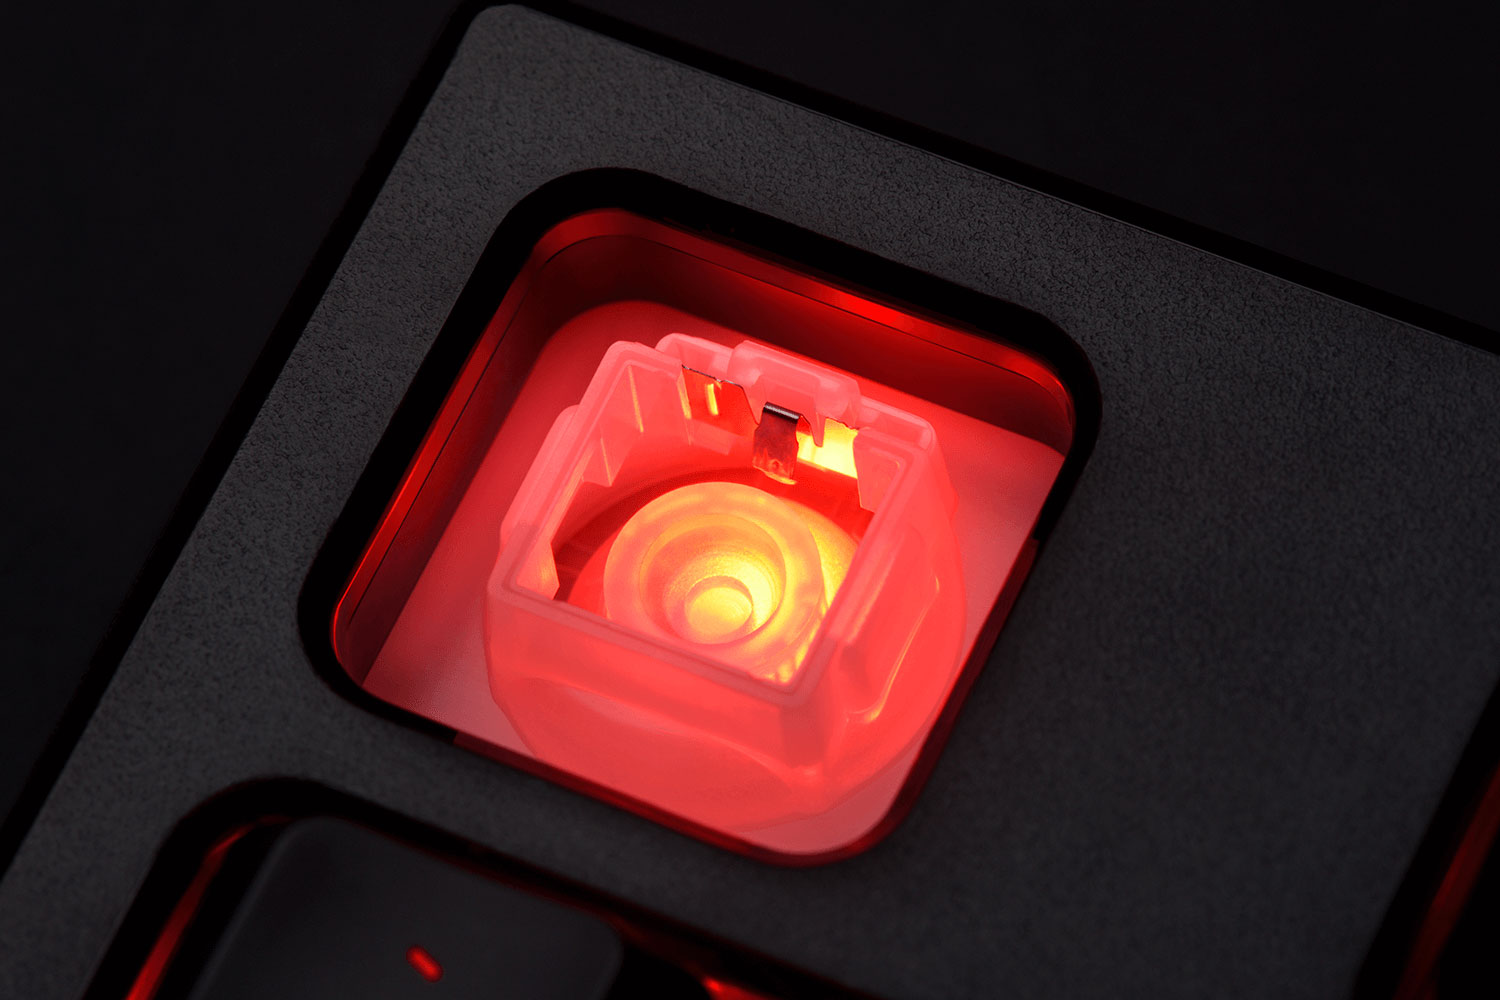 Razer Ornata Chroma Mecha-Membrane RGB Gaming Keyboard Wristrest QWERTY (US)